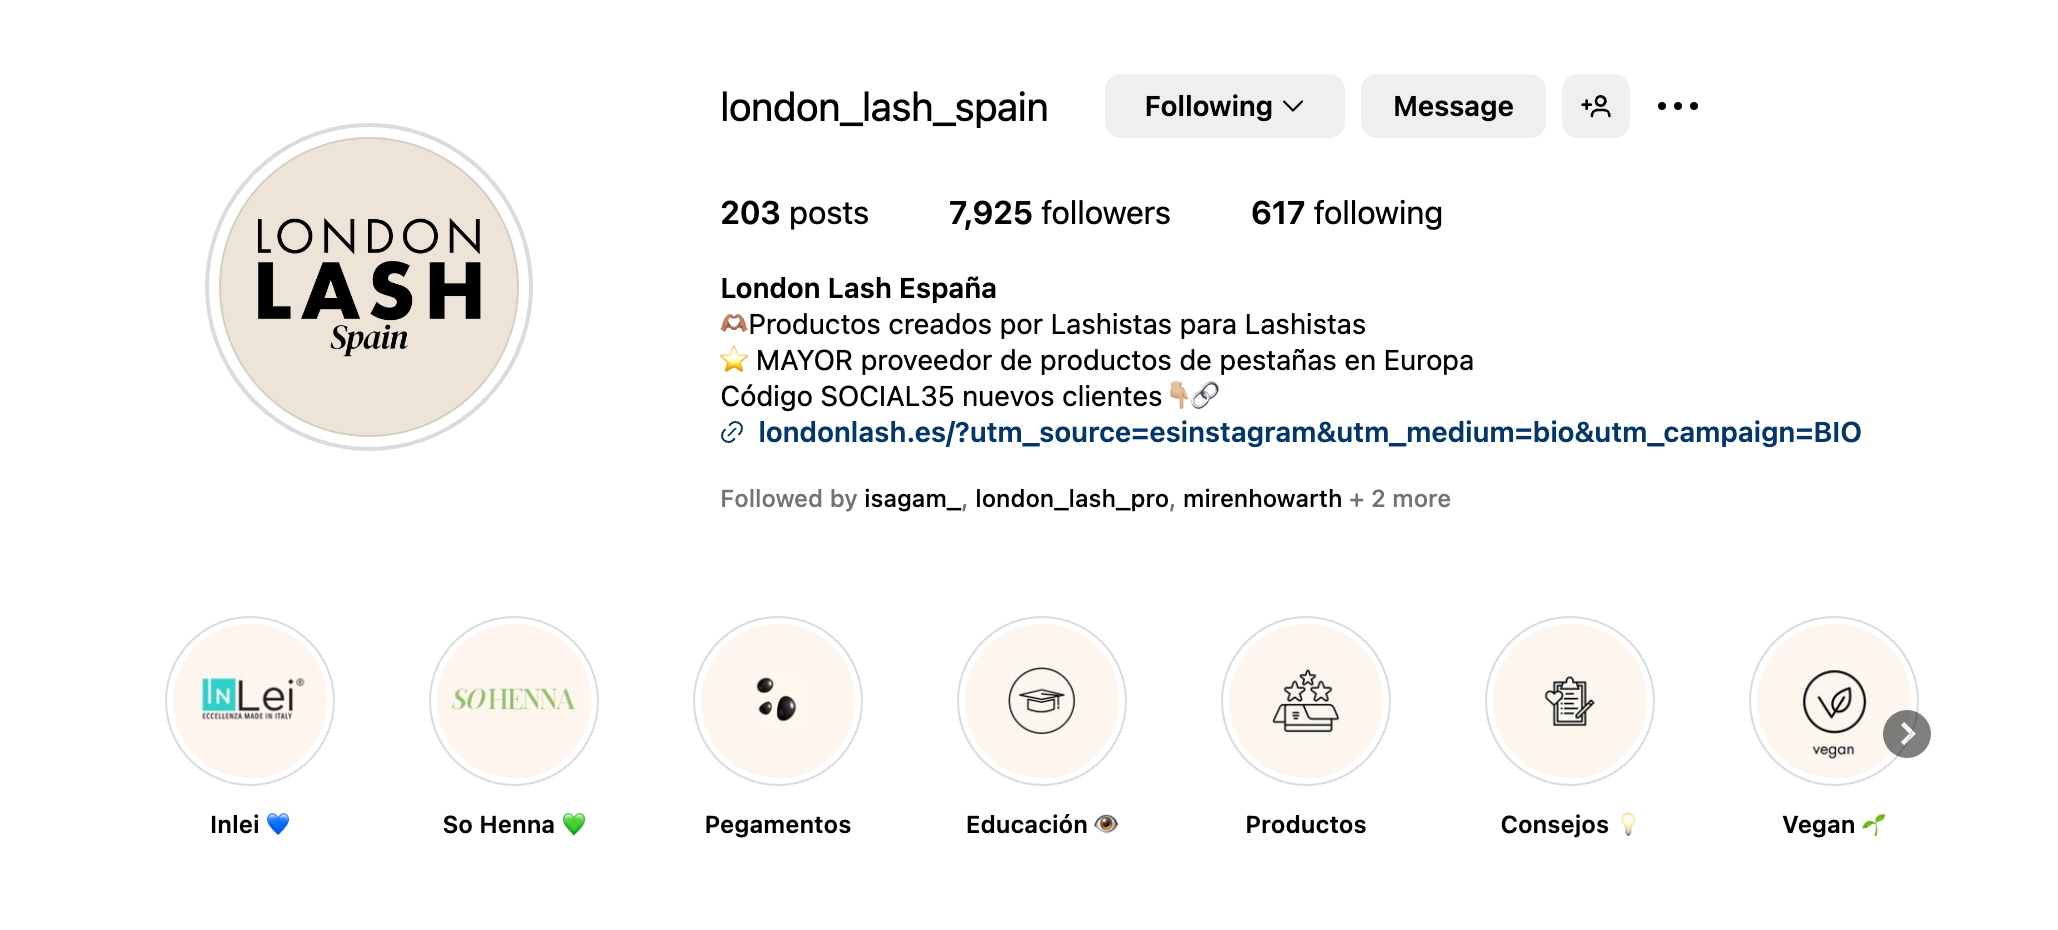 Instagram IG: london_lash_spain | London Lash España